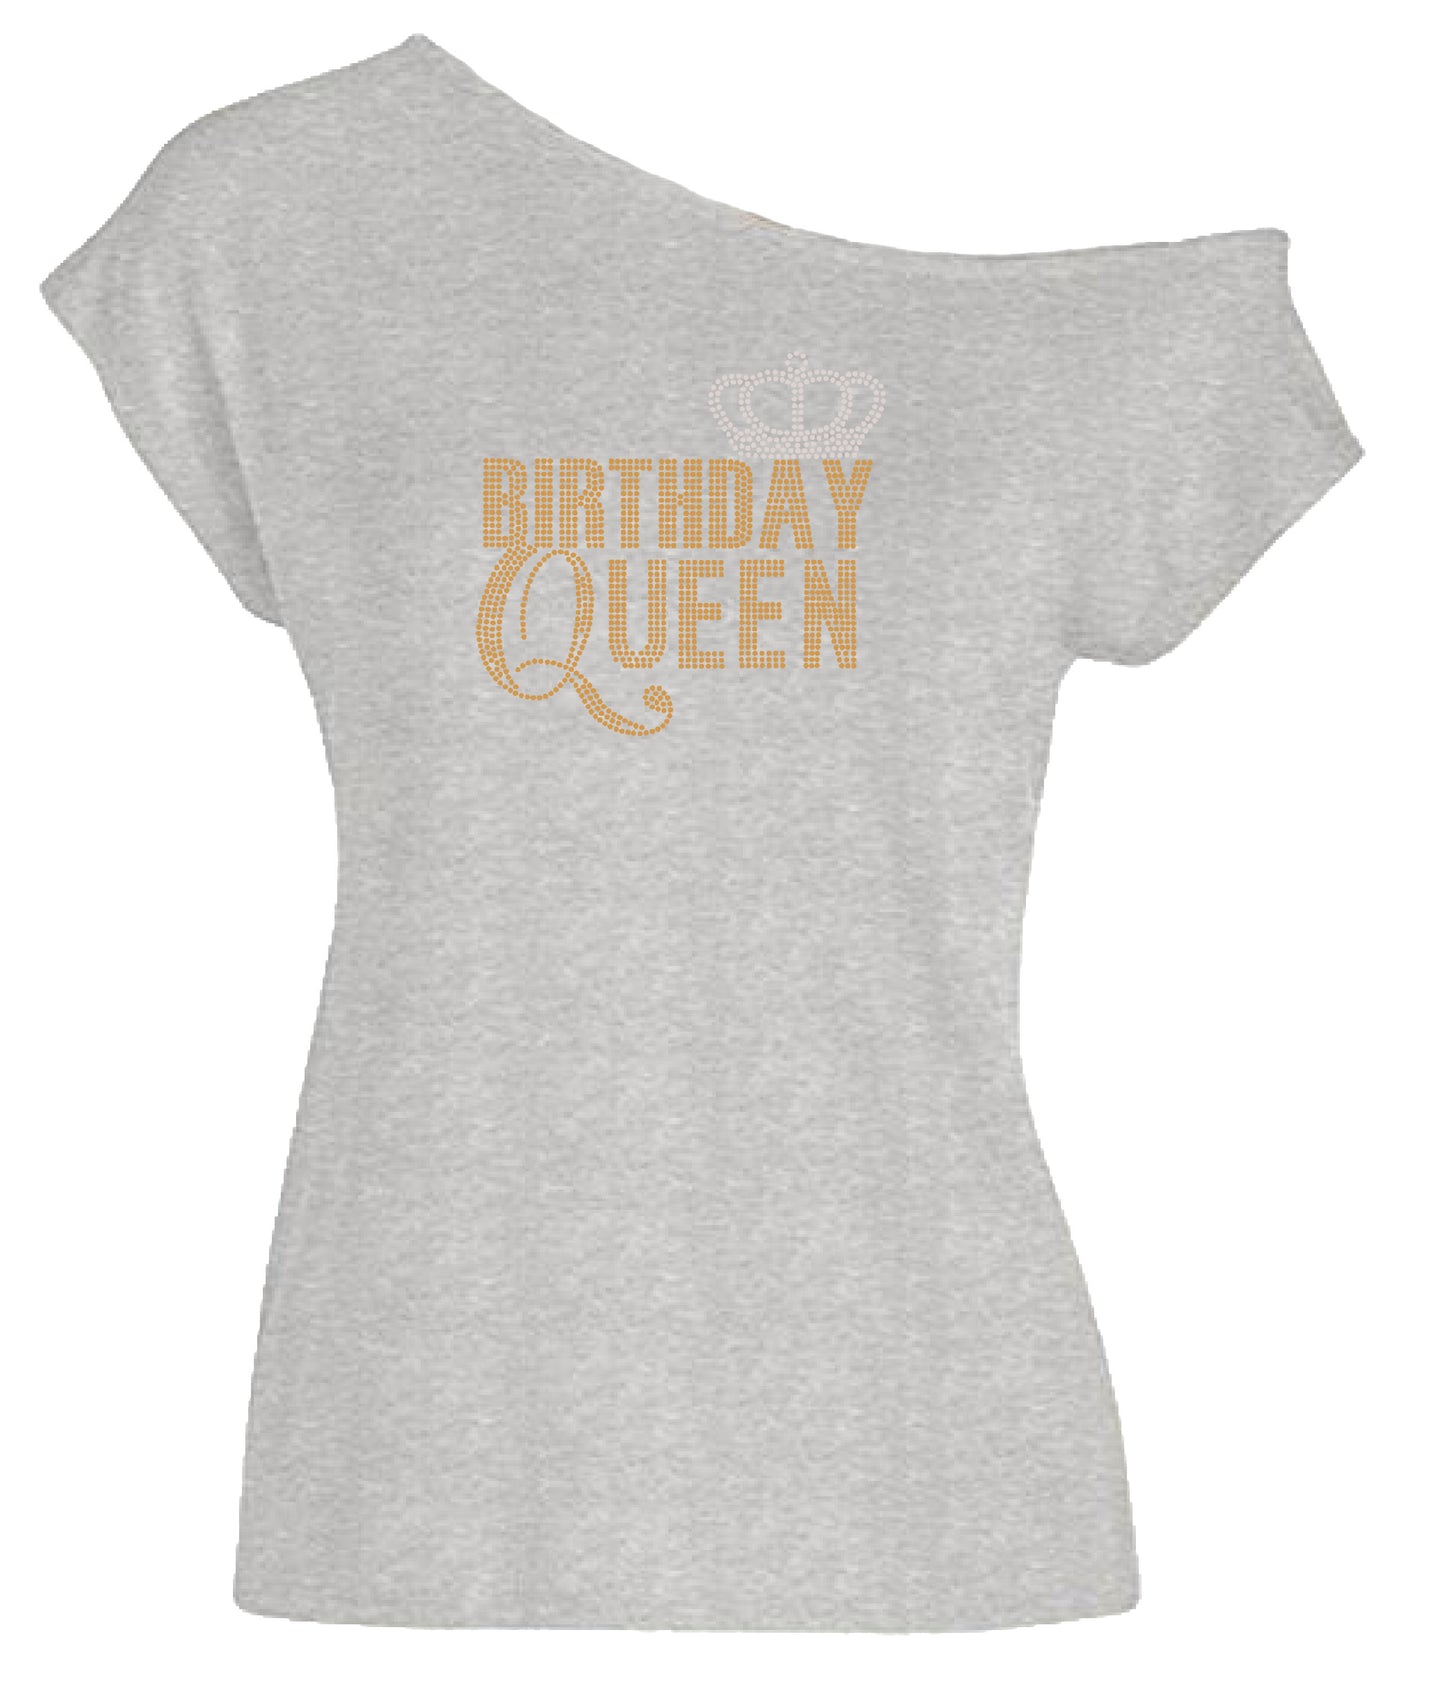 Birthday Queen With Crown Rhinestone Off Shoulder Tee